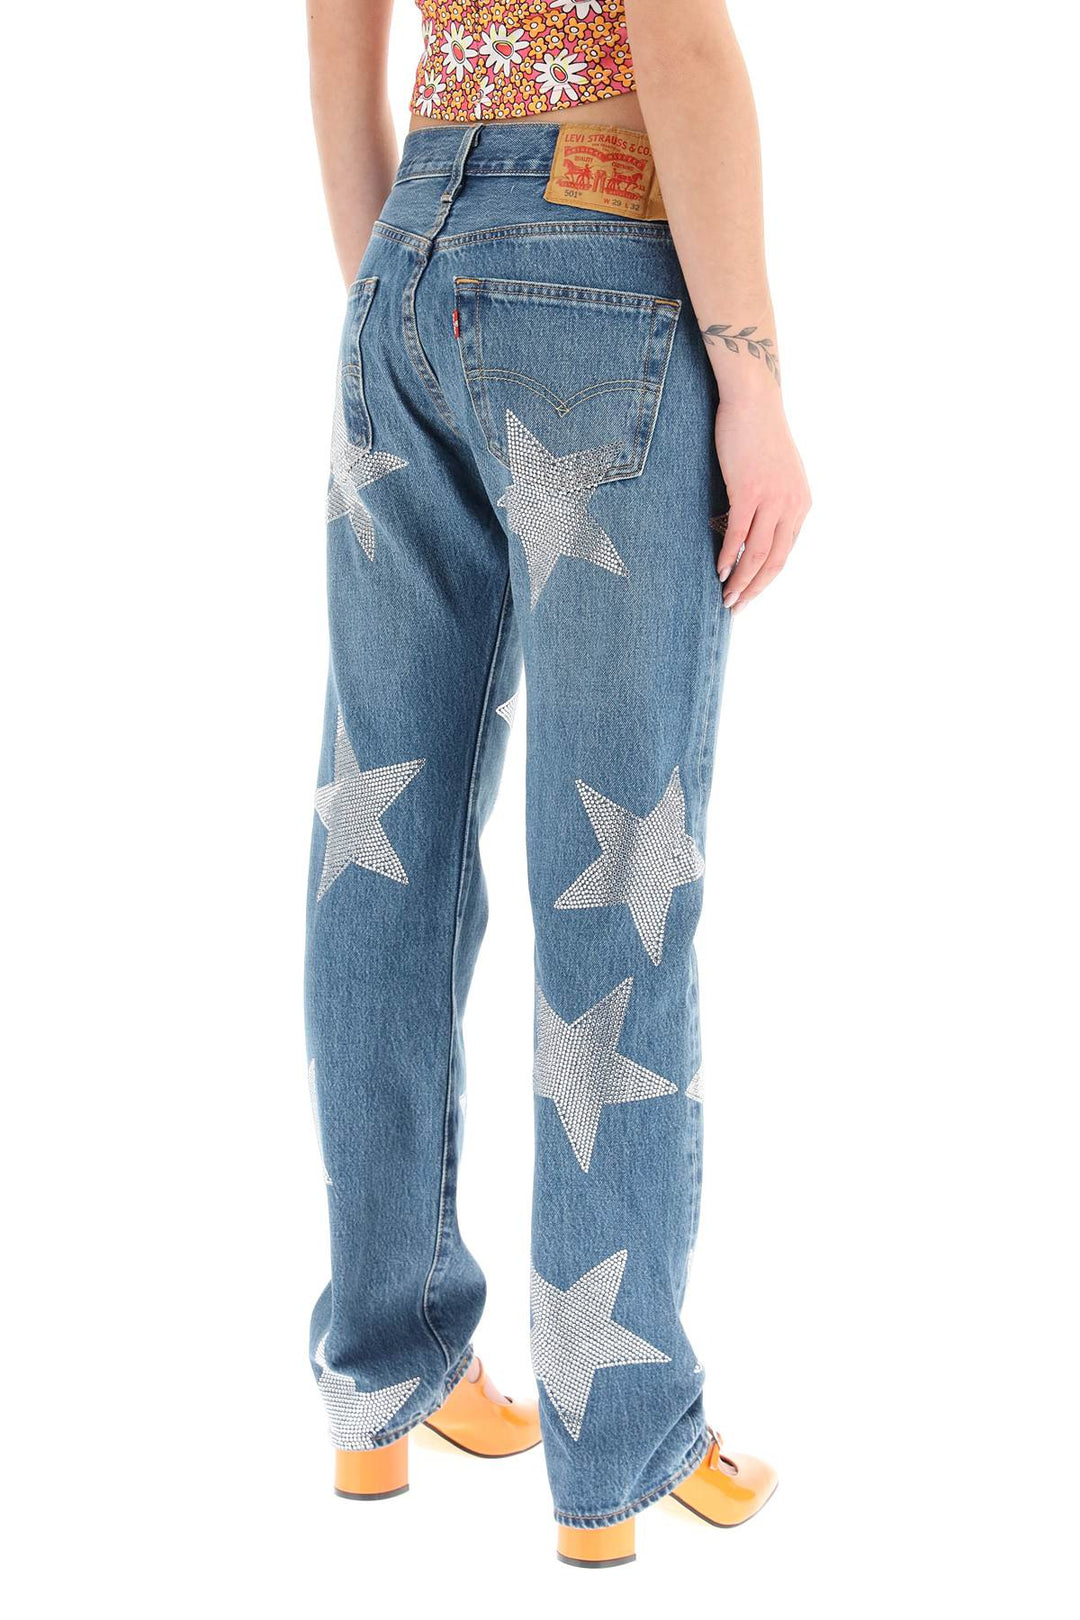 Jeans 'Rhinestone Star' X Levis - Collina Strada - Donna